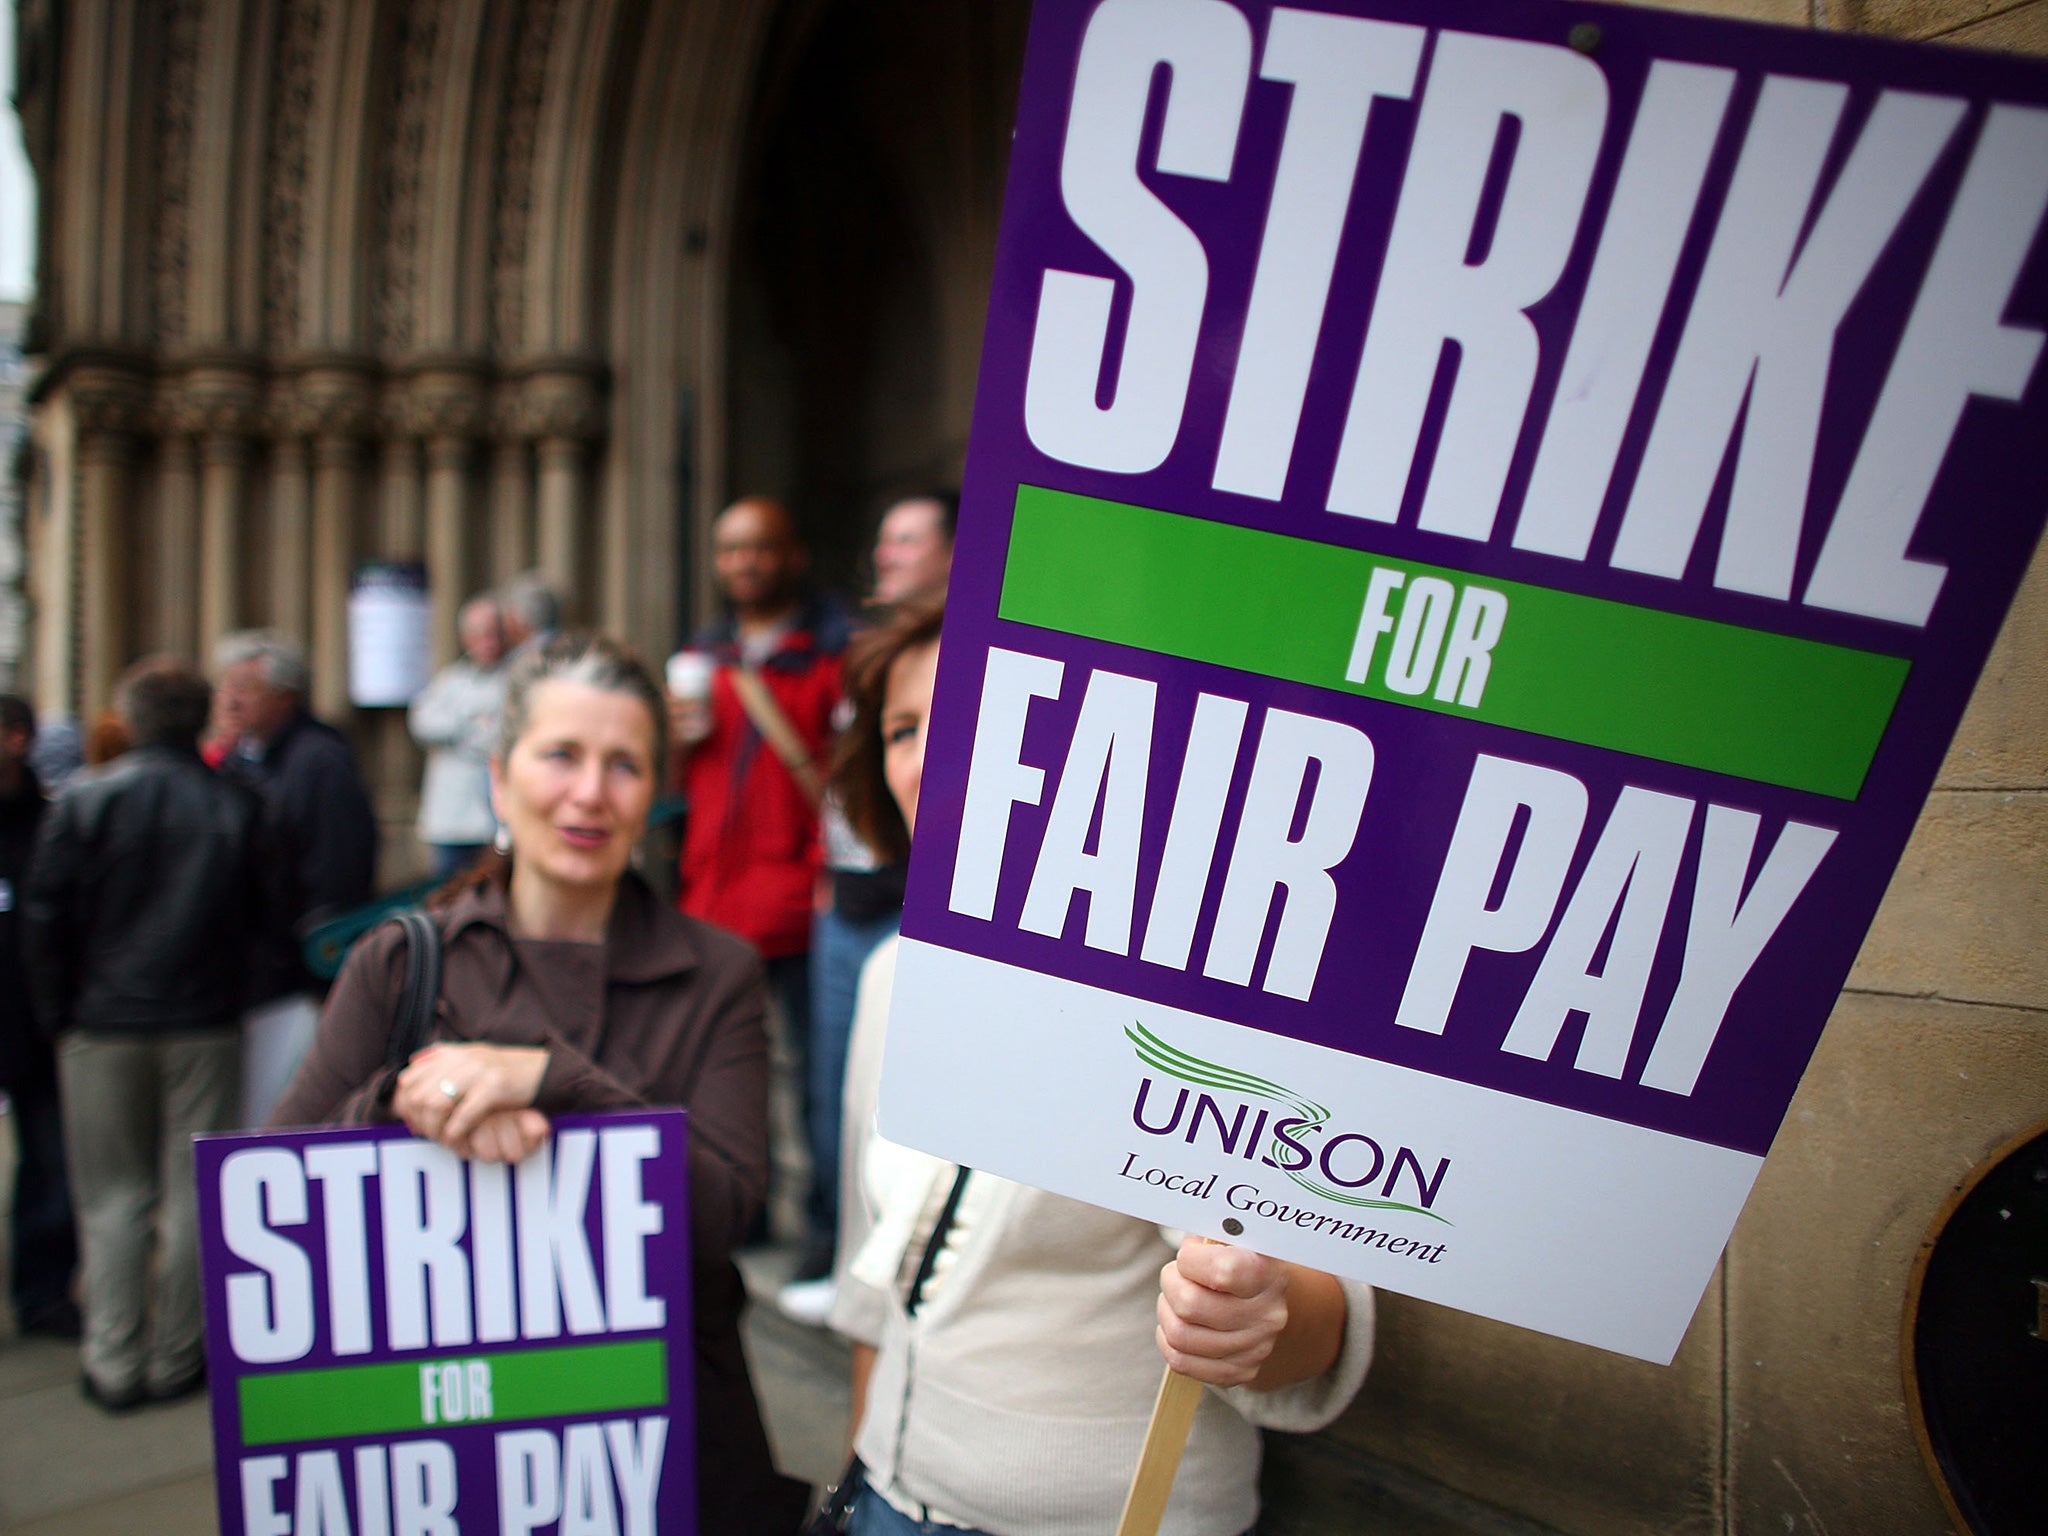 Changes to legislation on taking strikes threaten to cripple Unison’s ability to fight an austerity programme